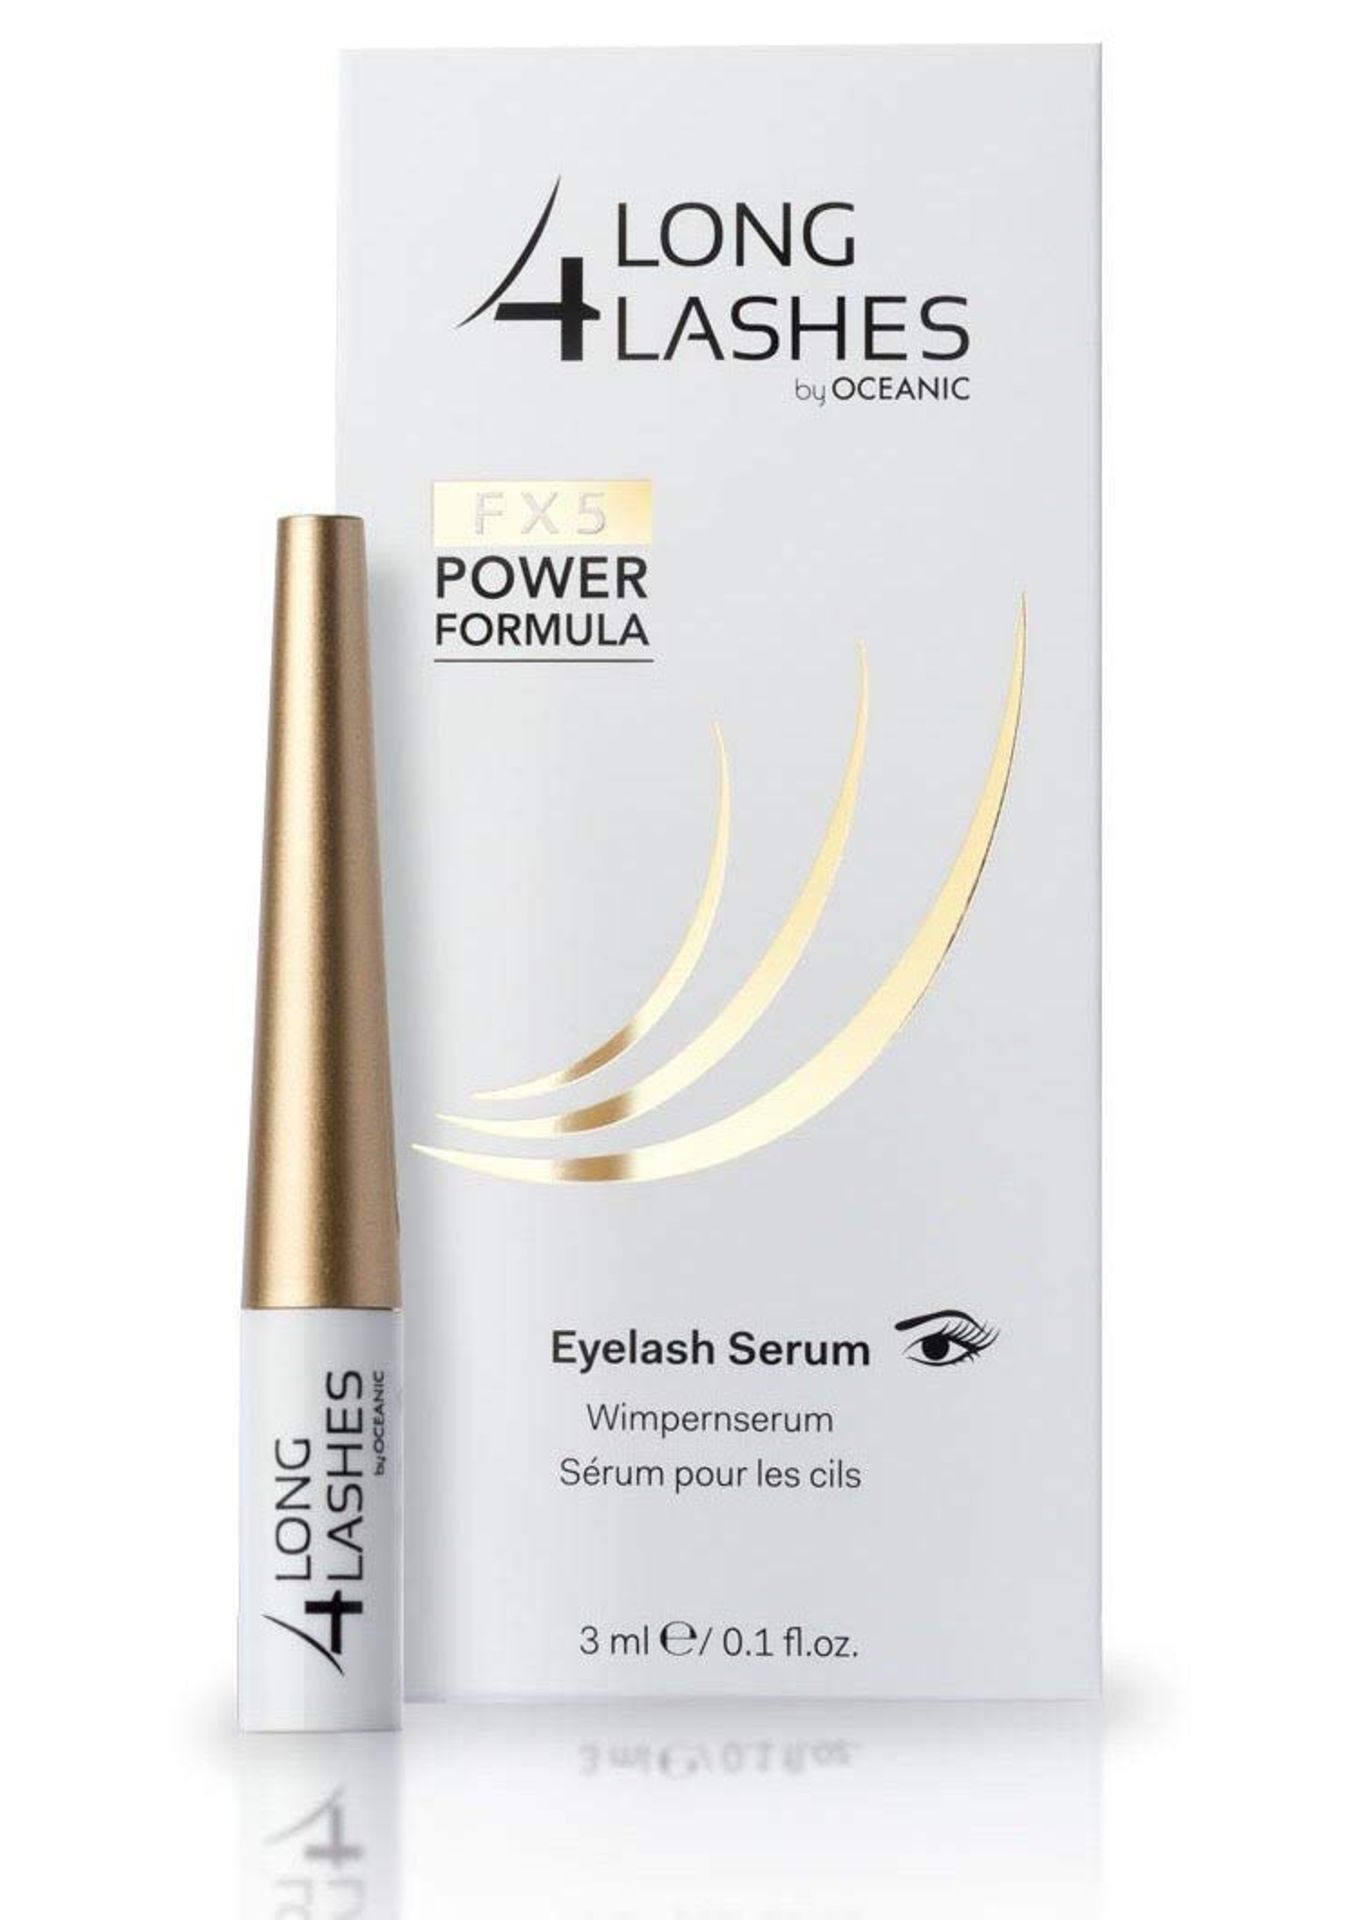 Brand new Long4Lashes FX5 Power Formula Eyelash Serum by Oceanic £29.99